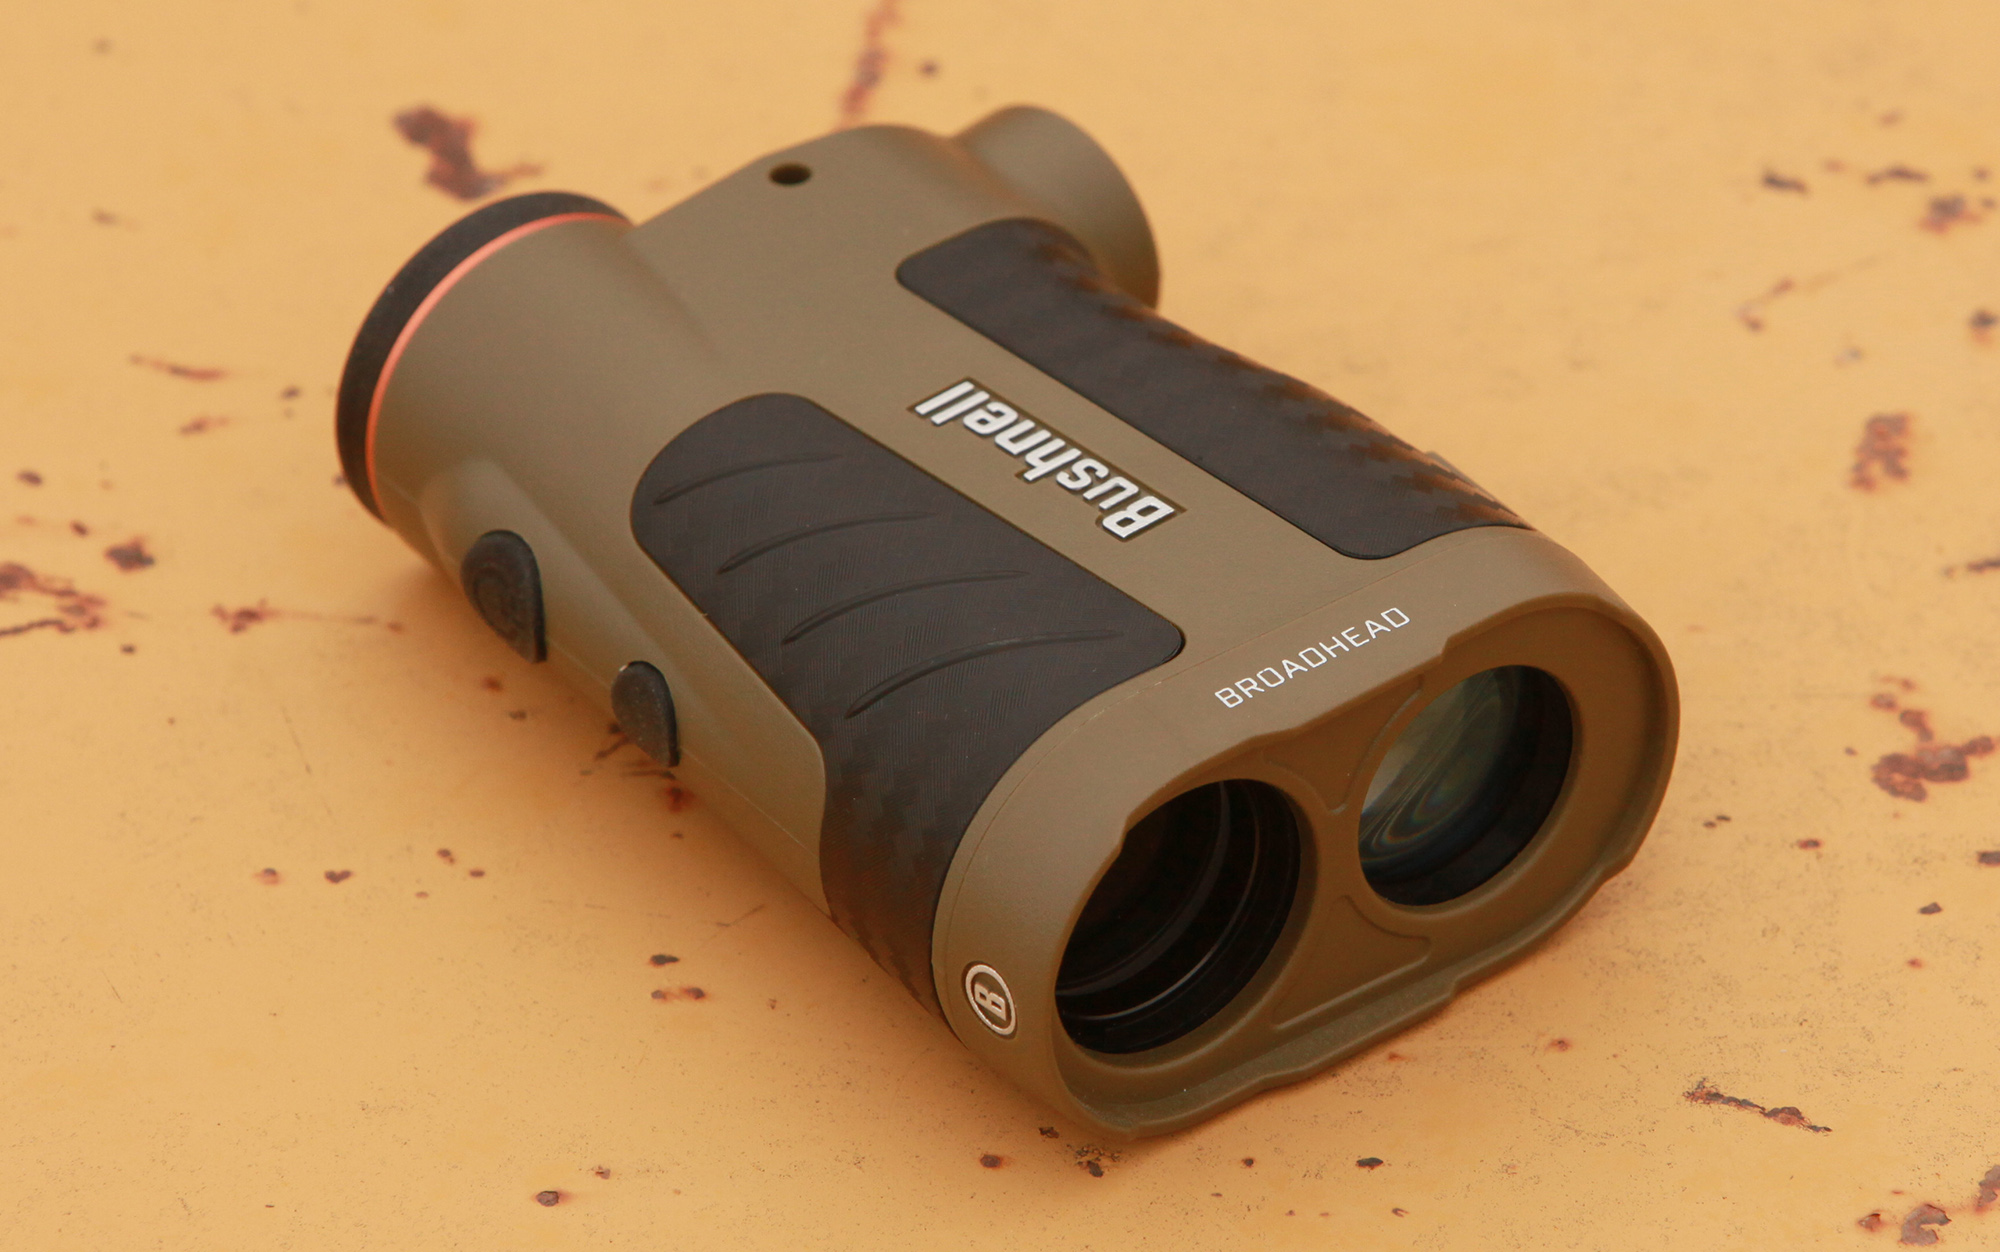 The Bushnell Broadhead is a laser rangefinder.